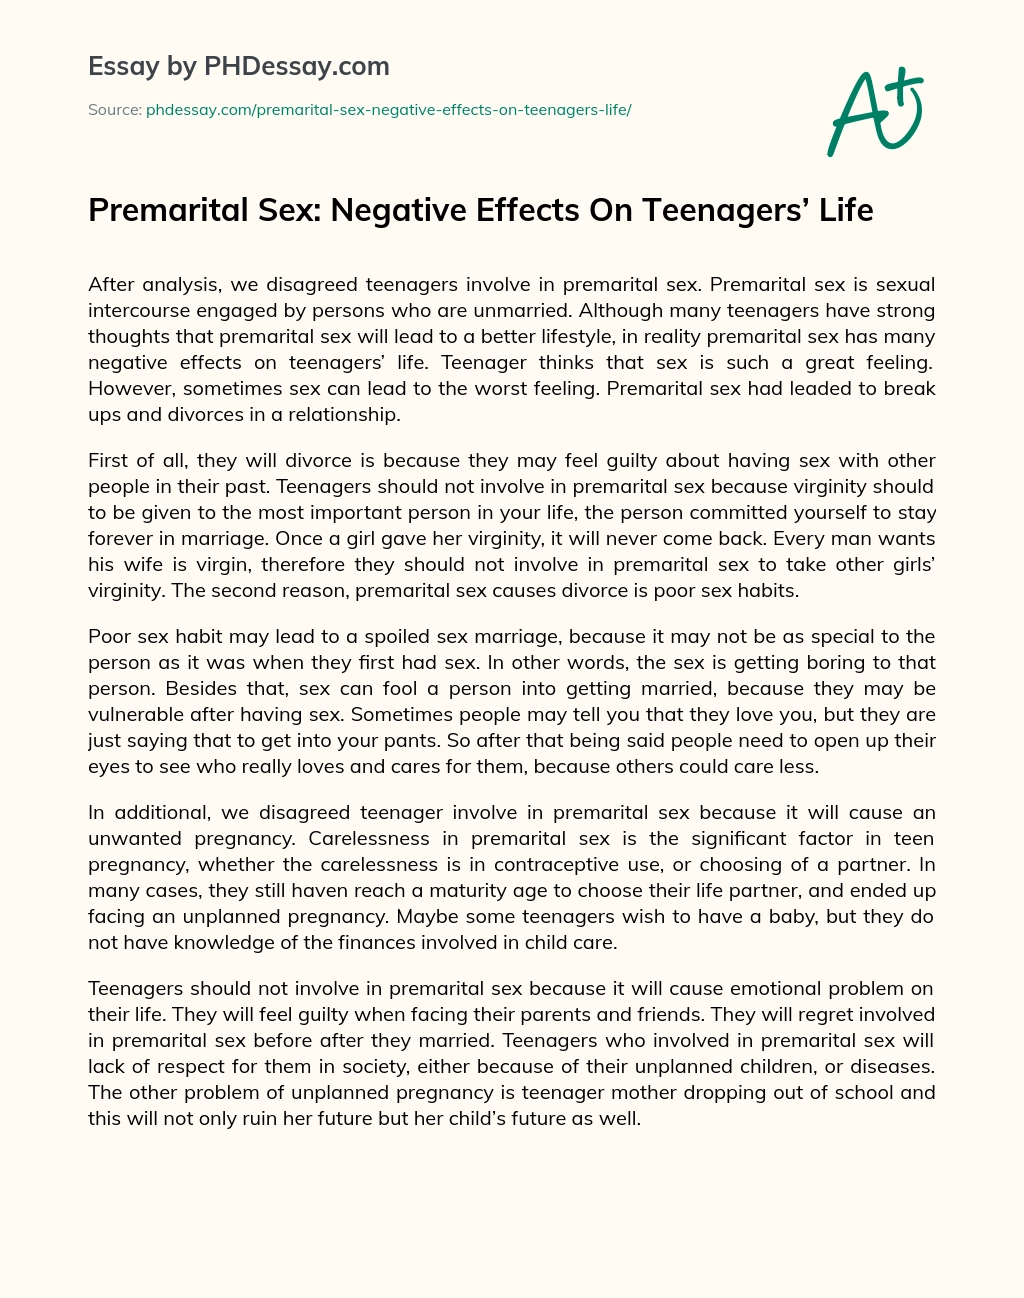 Premarital Sex: Negative Effects On Teenagers’ Life essay